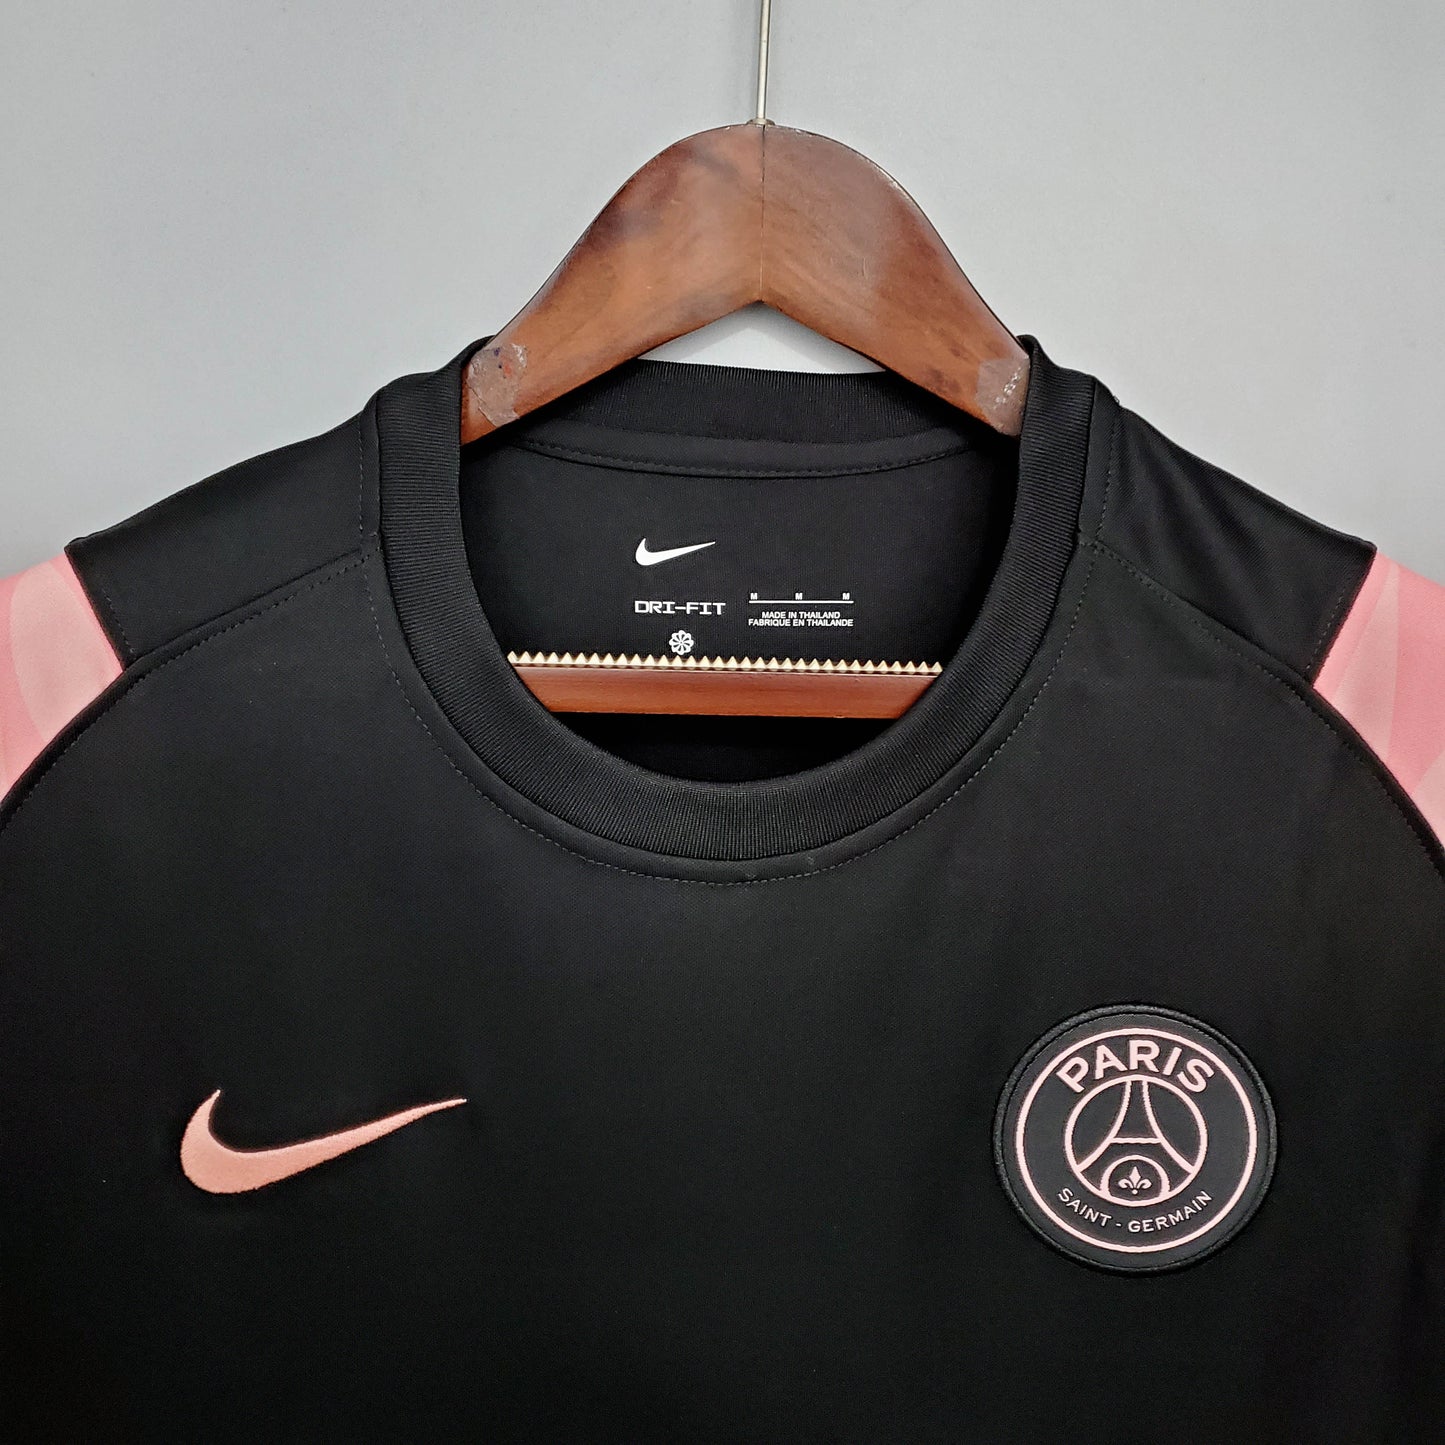 2021/2022 Psg Paris Saint-Germain Training Wear Black And Pink